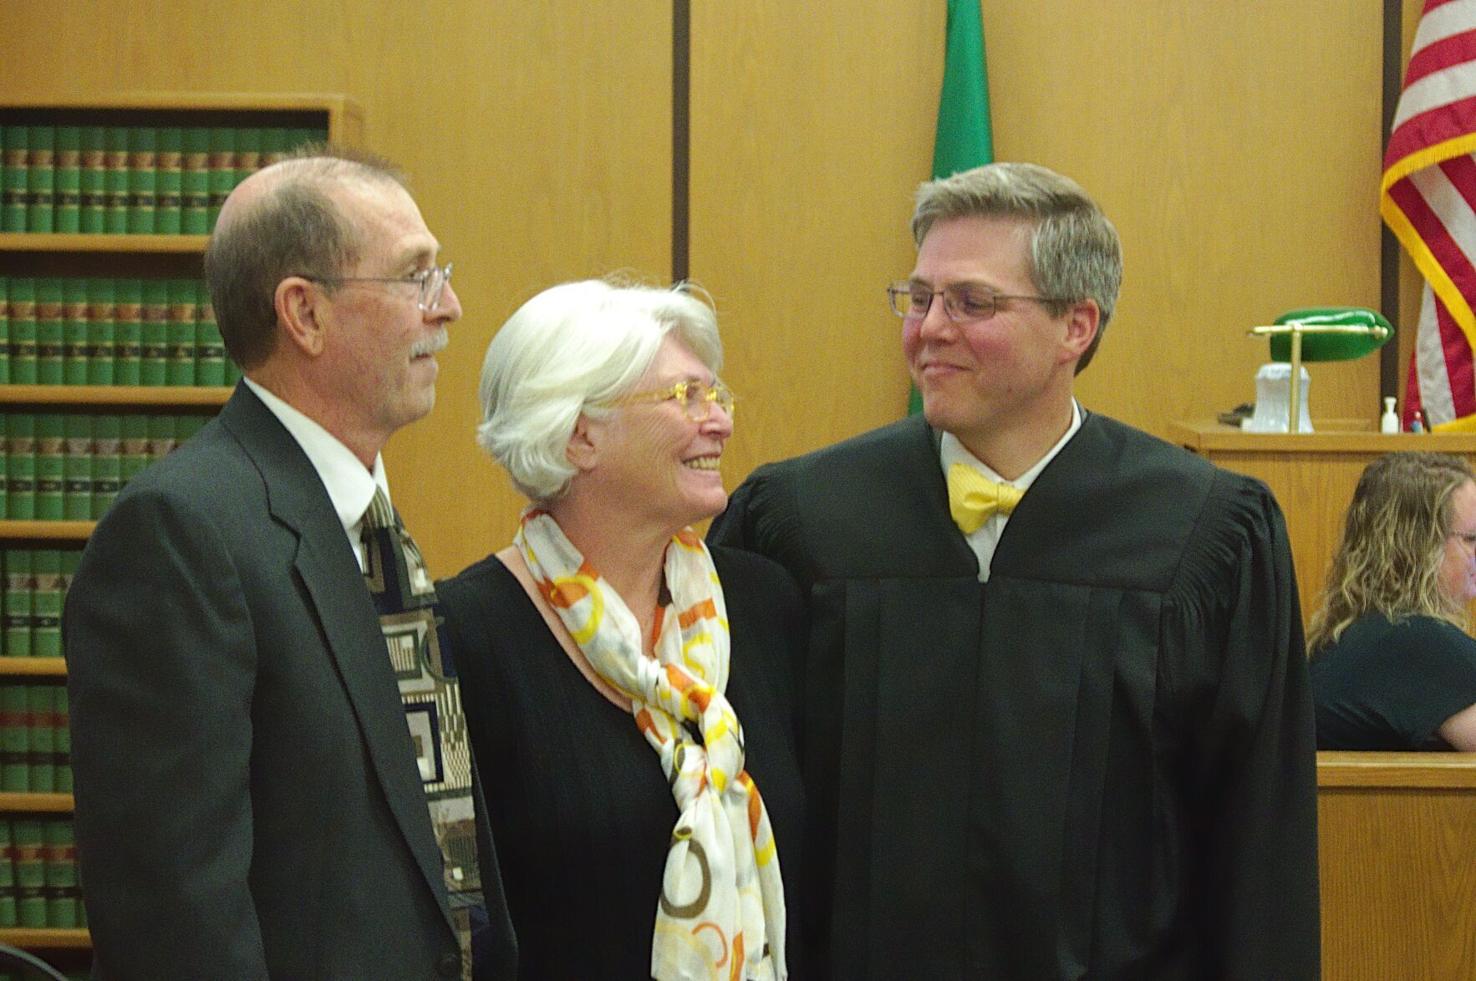 Yakima County Judges Elisabeth Tutsch and Jeff Swan formally sworn in